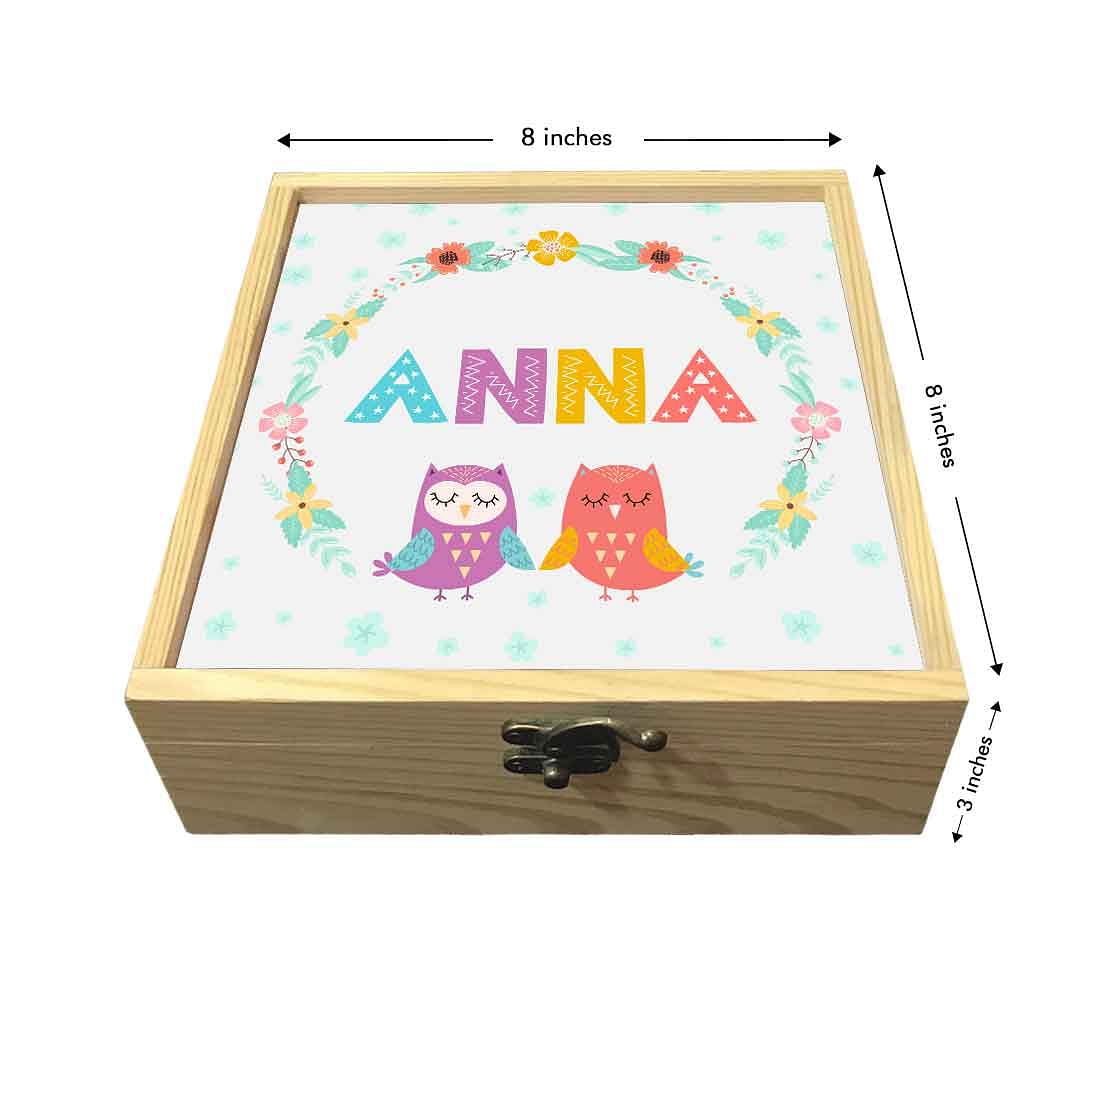 Wooden Jewellery Box for Children - Cute Owl Nutcase